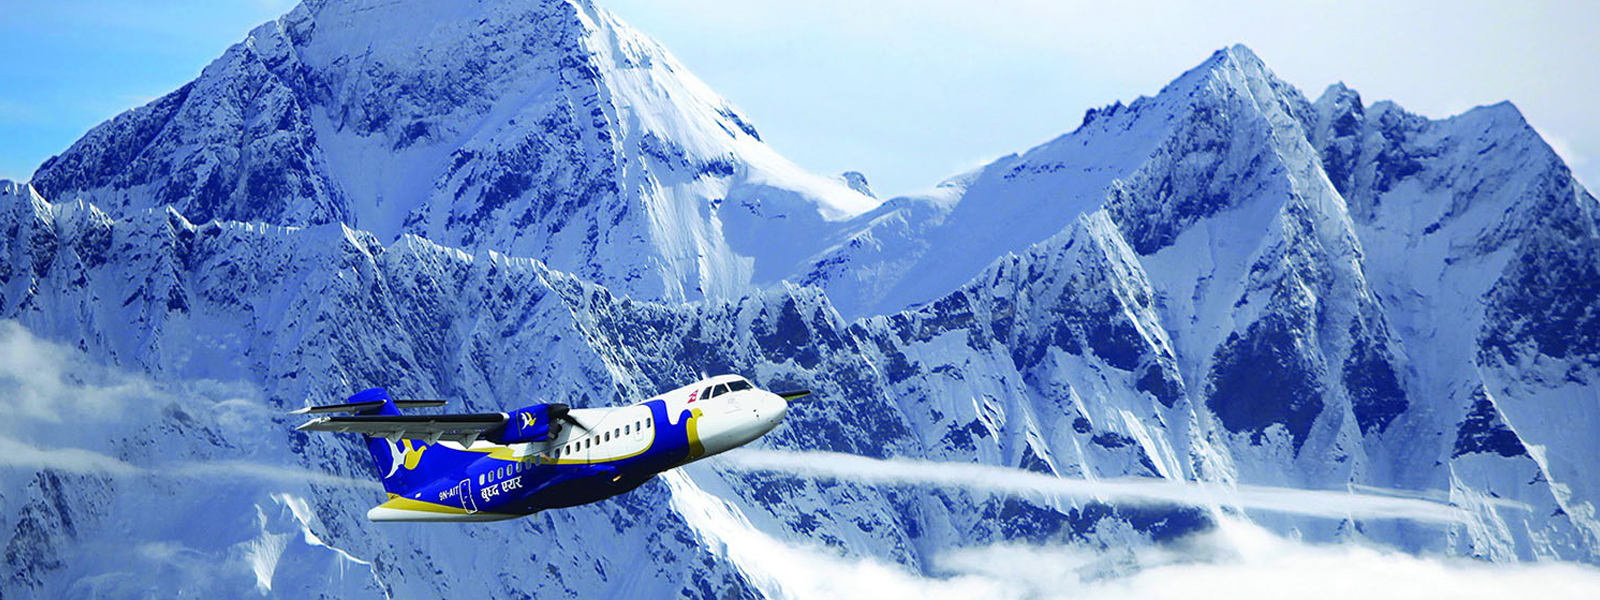 In Kathmandu mountain flight, tour at places of interest.'